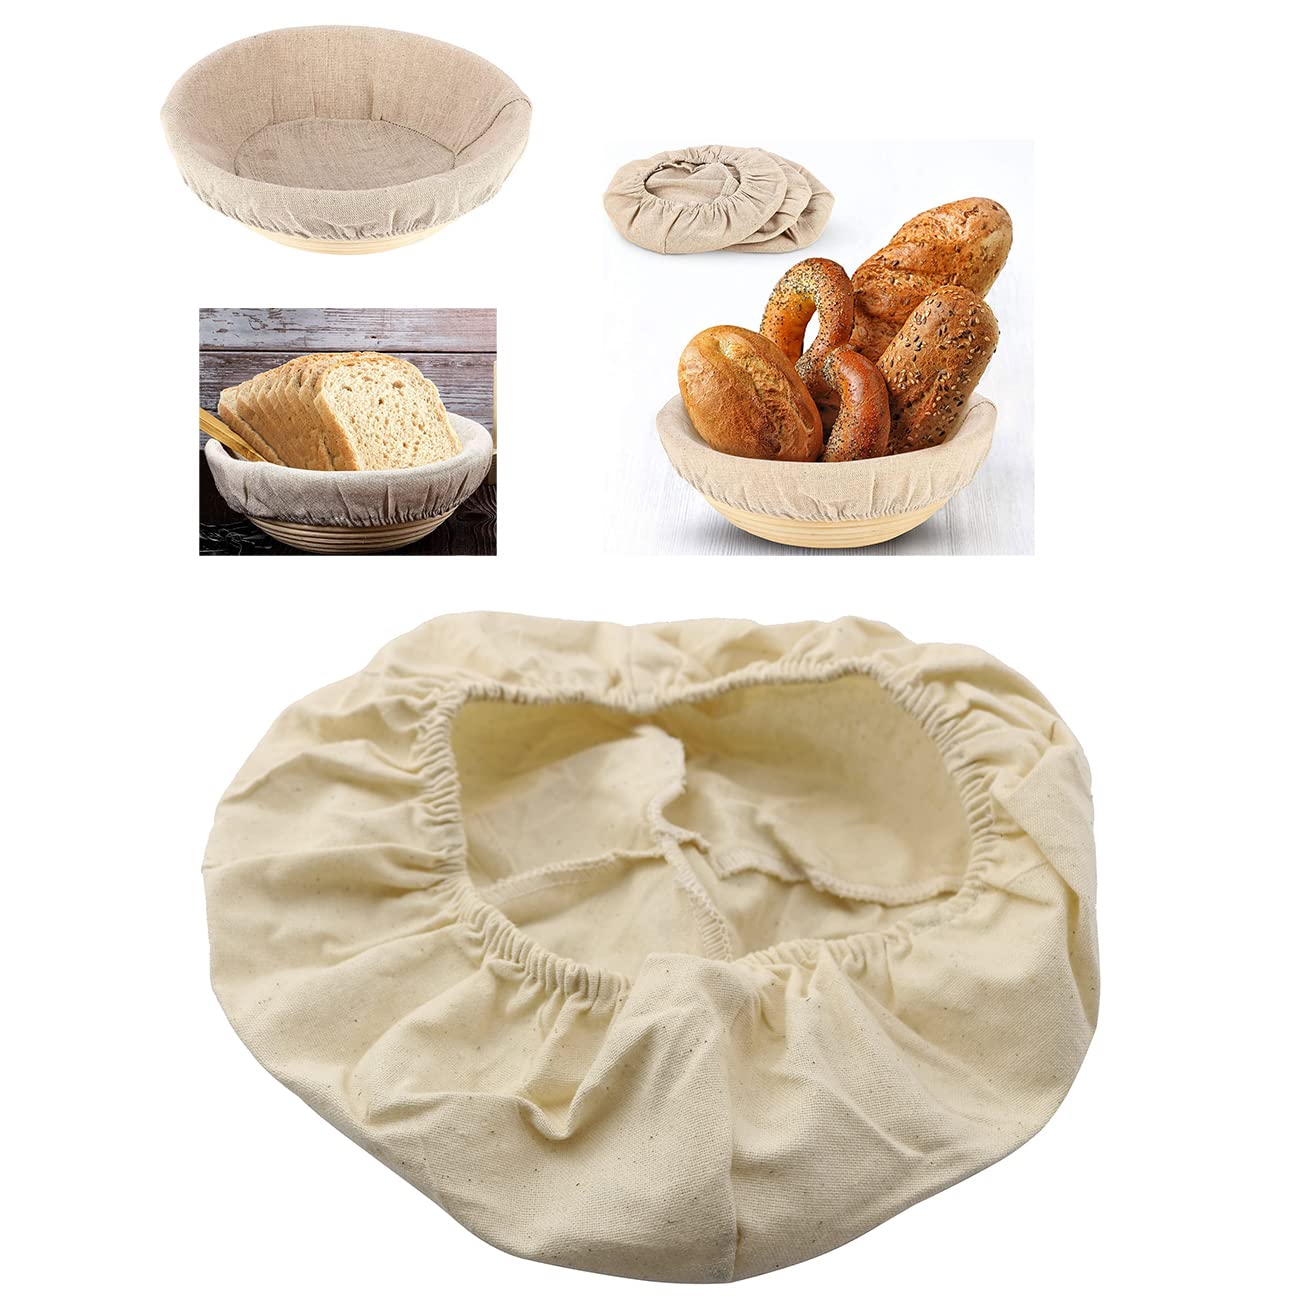 LQ Industrial 3pcs Round Bread Proofing Basket Cloth Liner 10" Rattan Baking Dough Basket Cover Natural Rattan Banneton Proofing Cloth